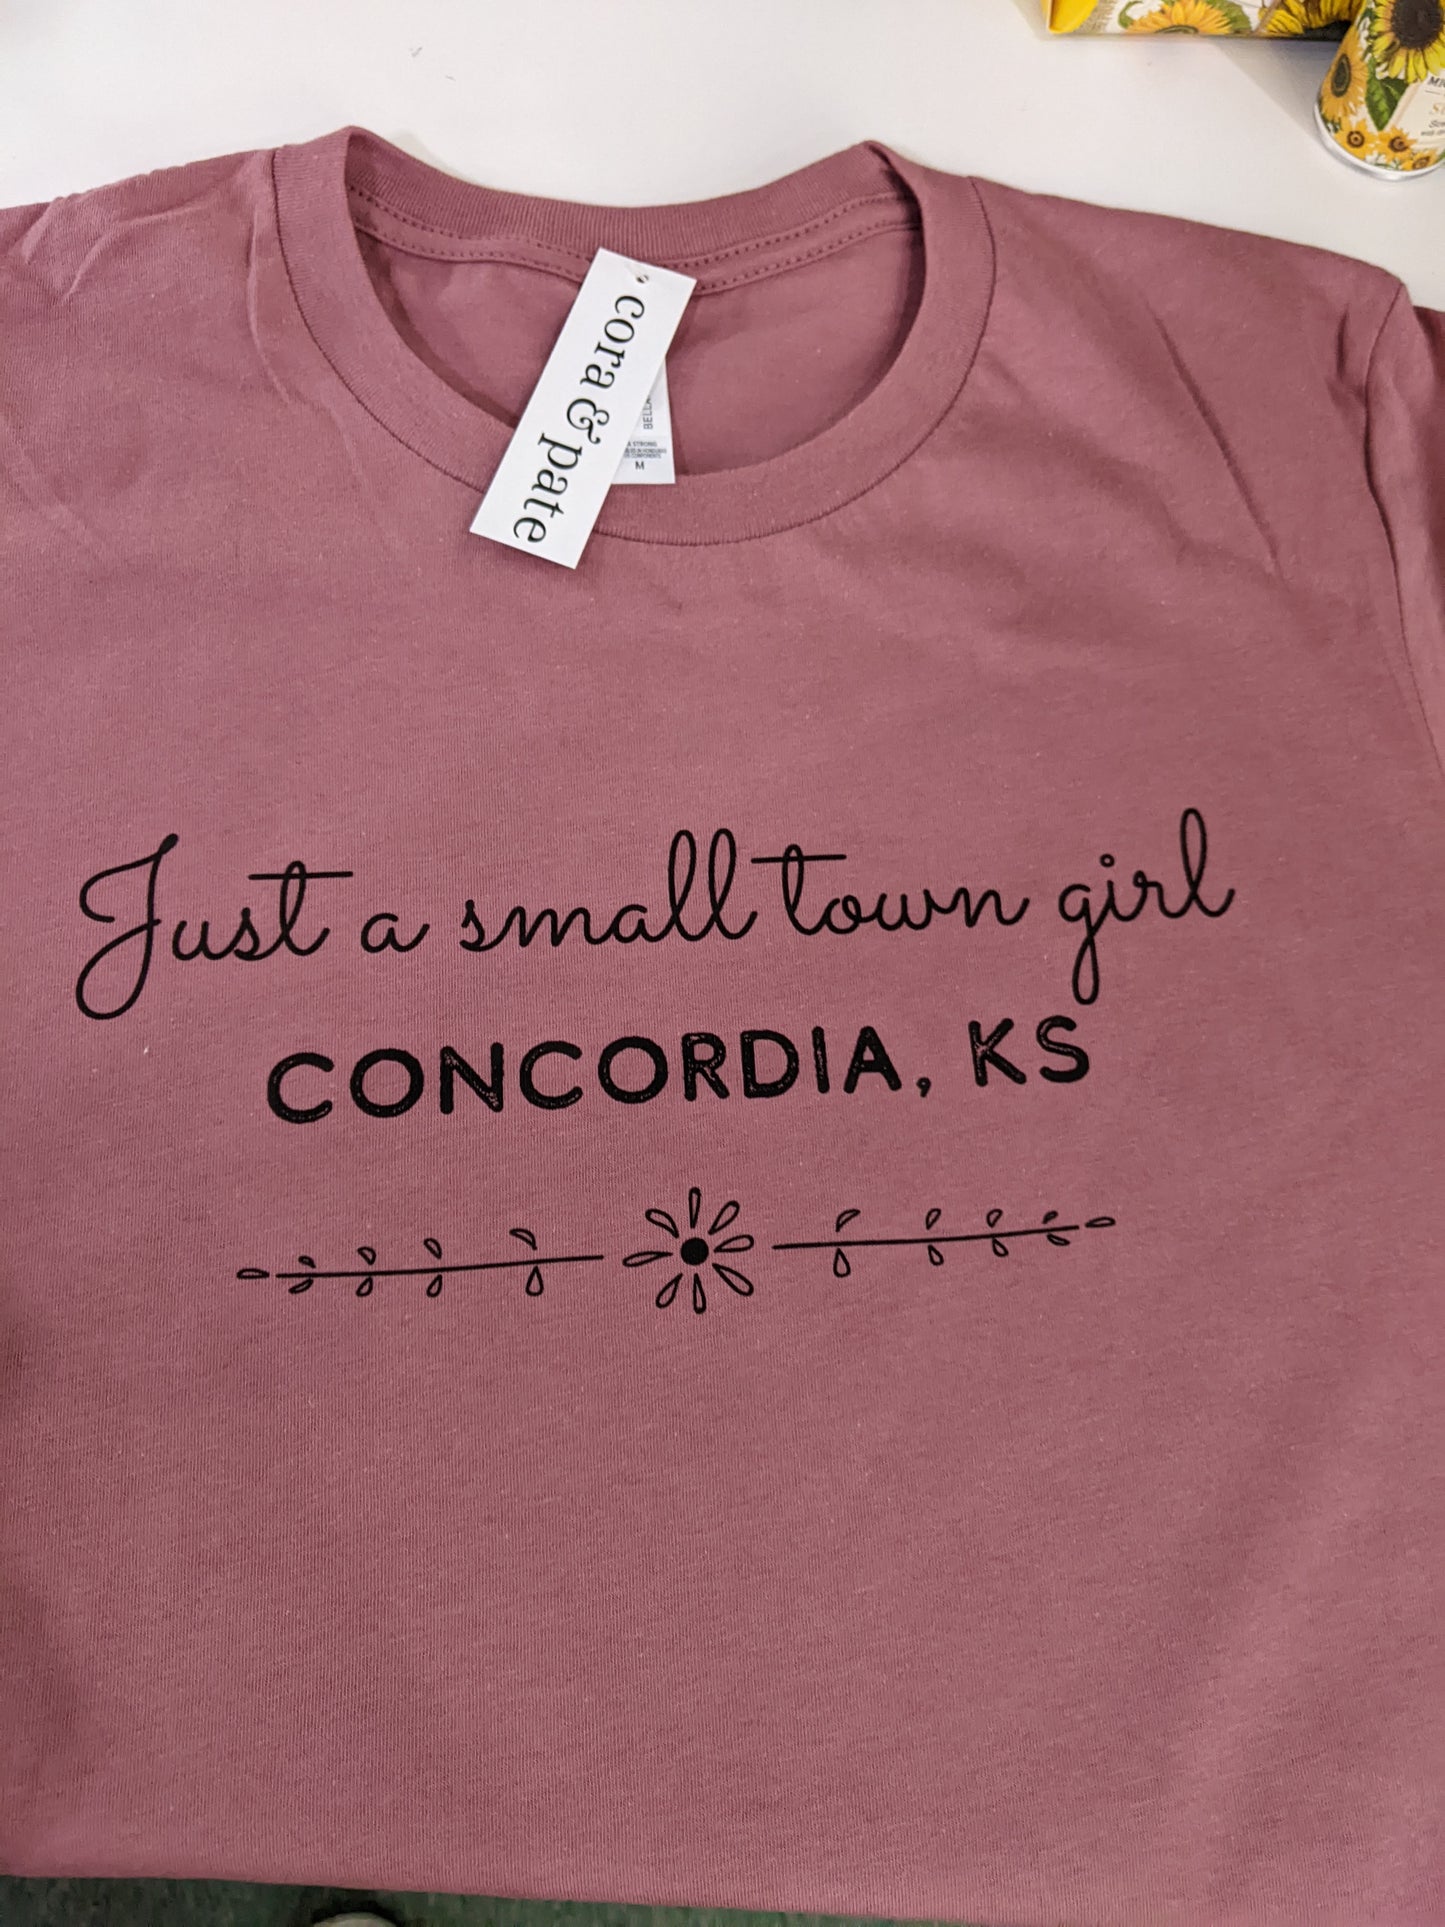 Concordia Small Town Girl T-Shirt - Blush